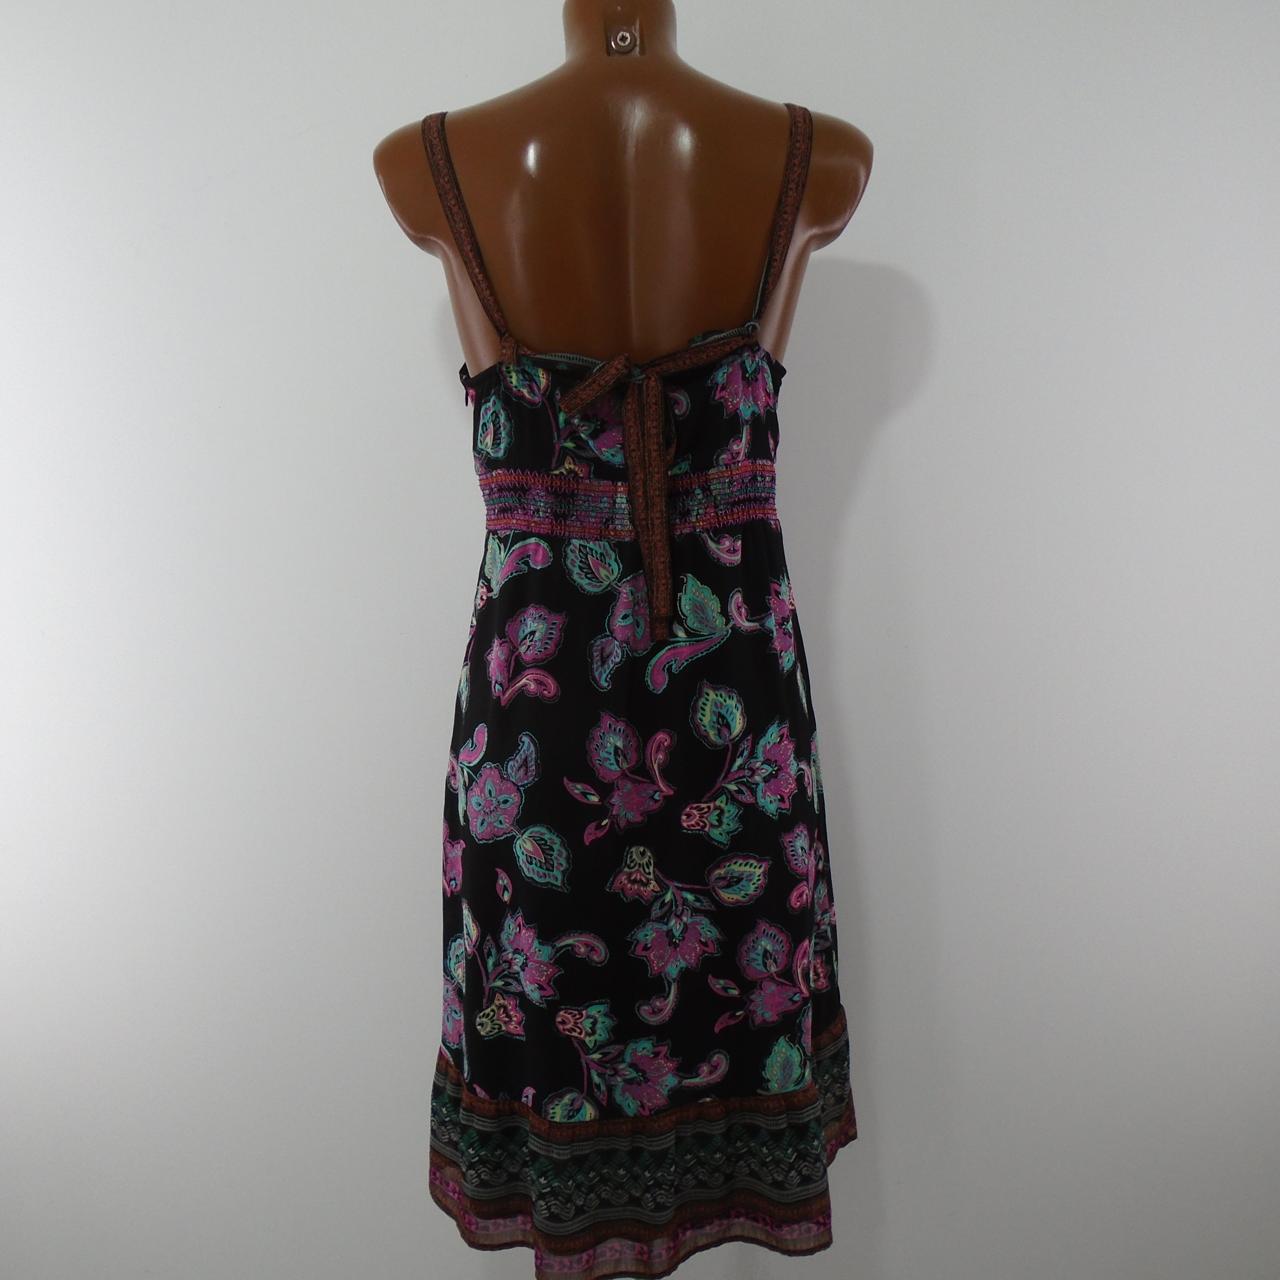 Women's Dress Esprit. Multicolor. L. Used. Very good